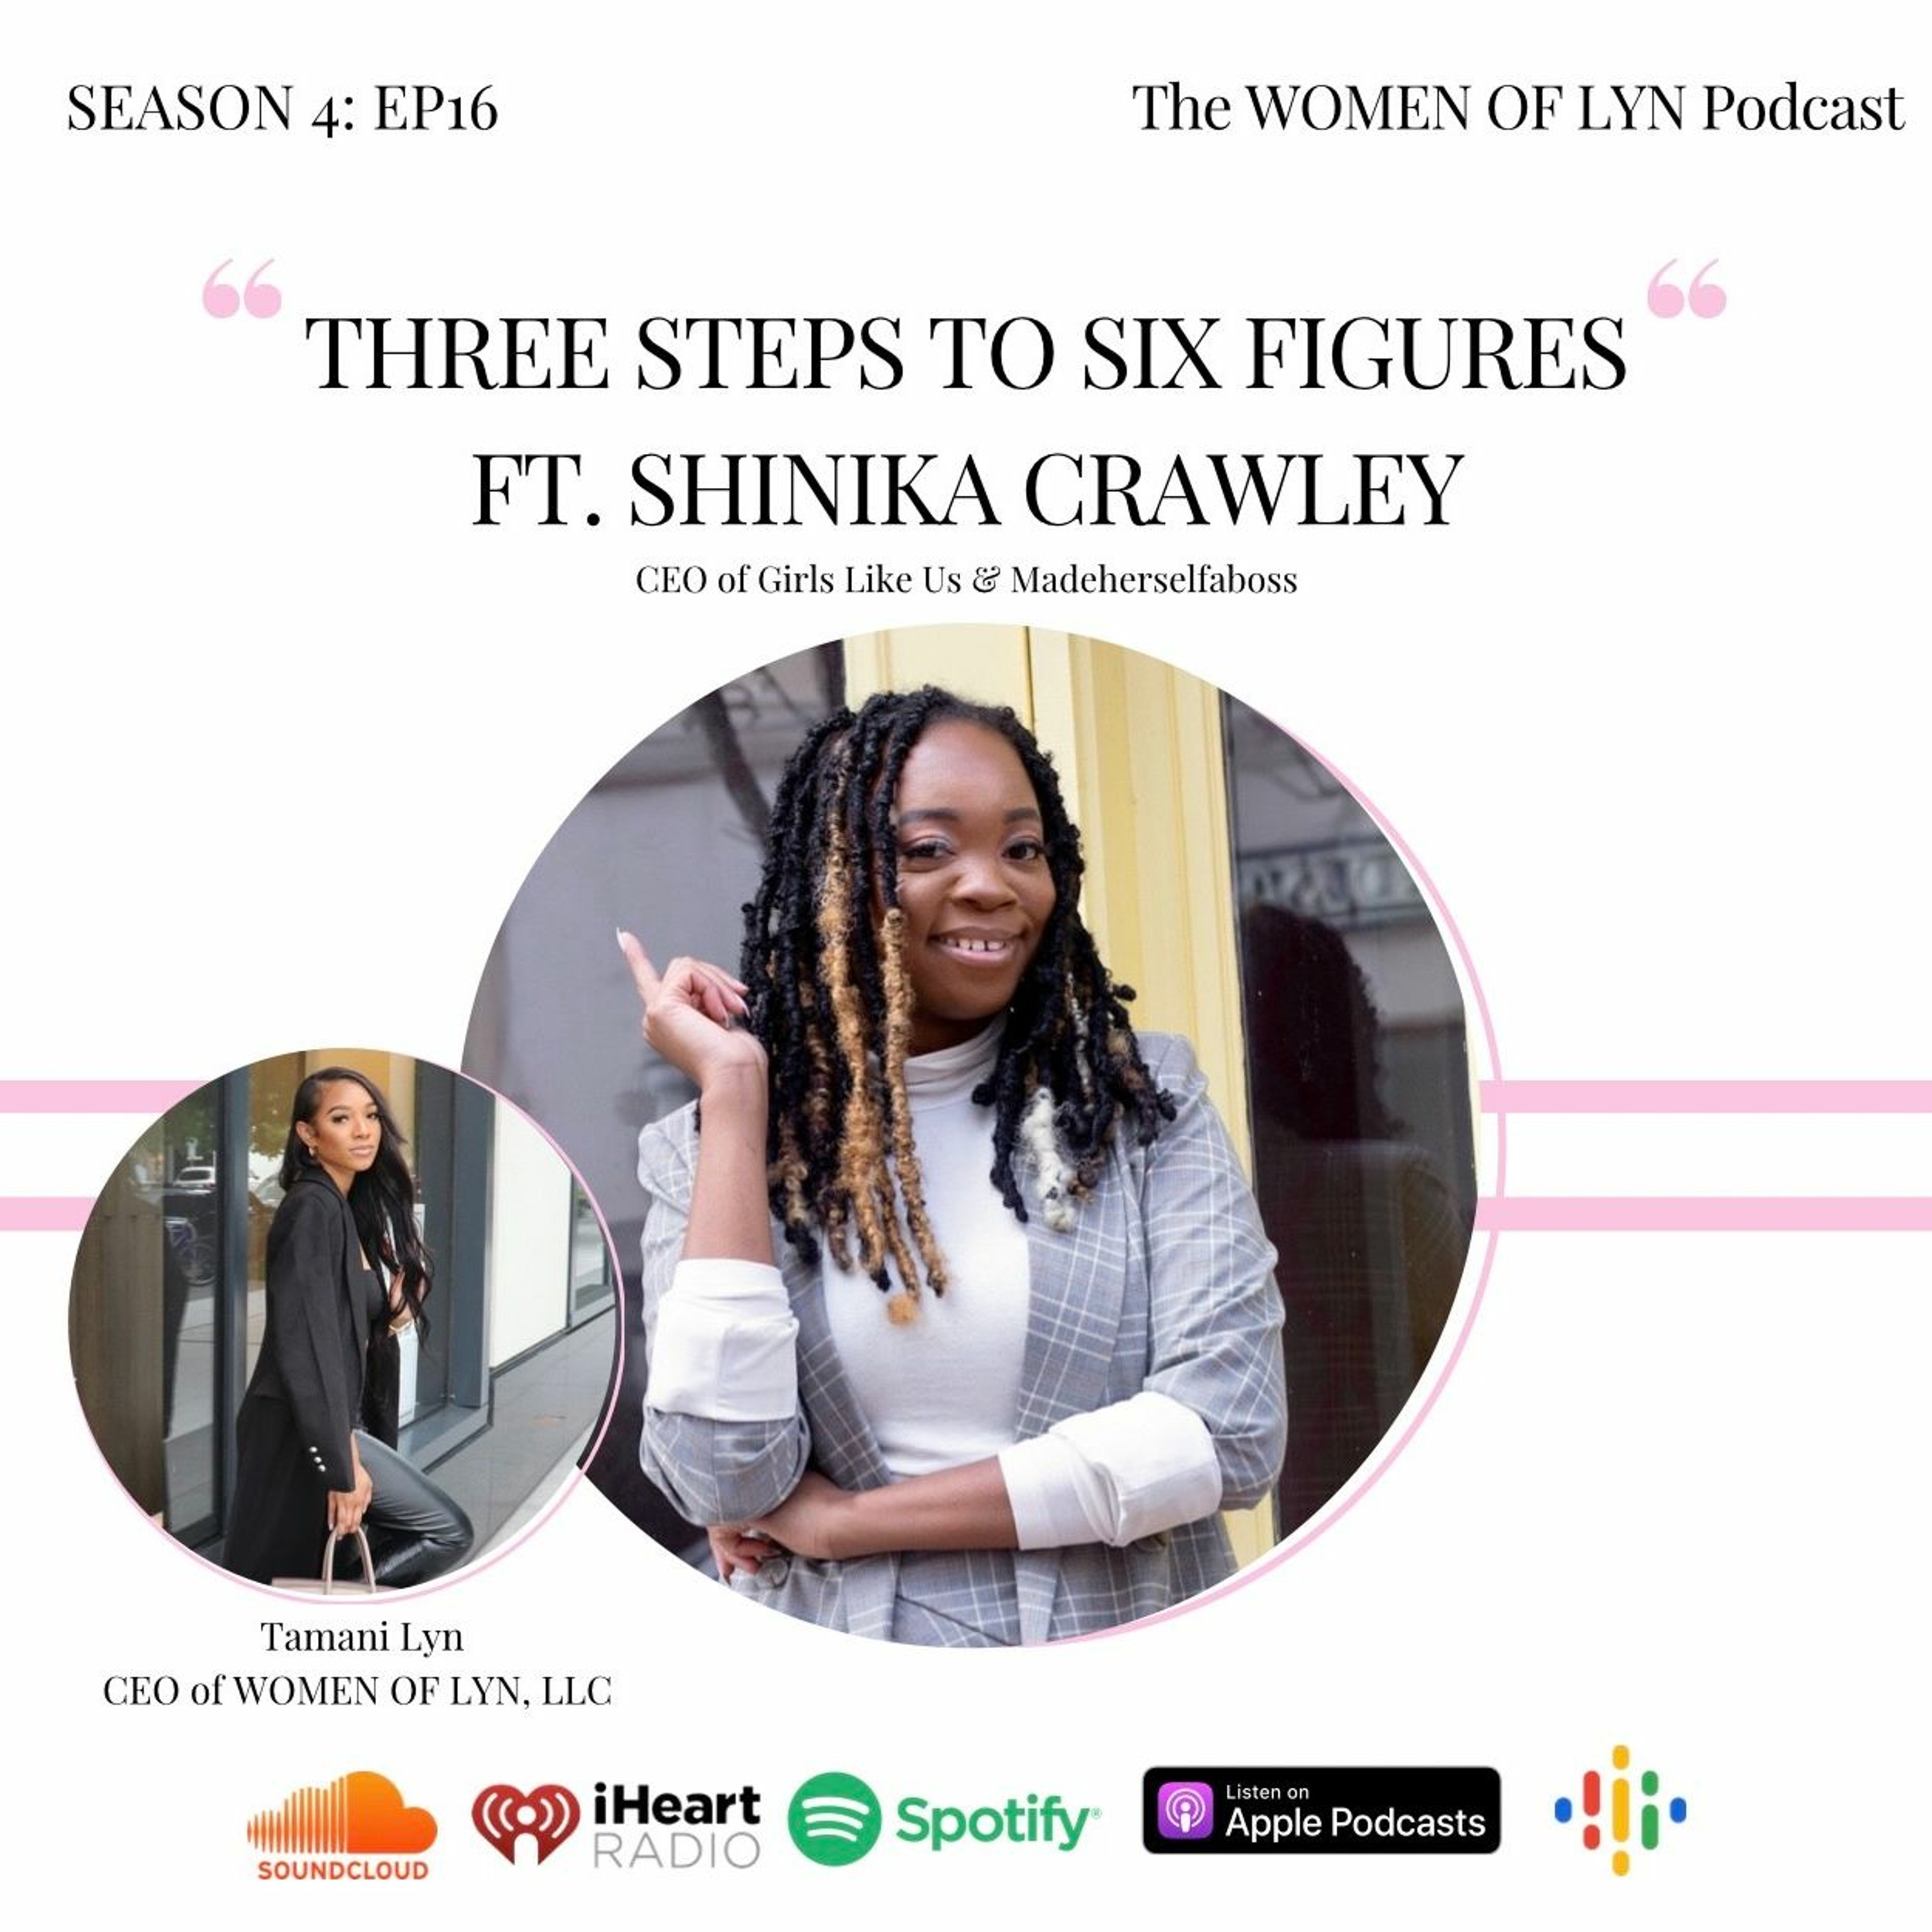 Episode 16: ”Three Steps To Six Figures” Ft. Shinika Crawley